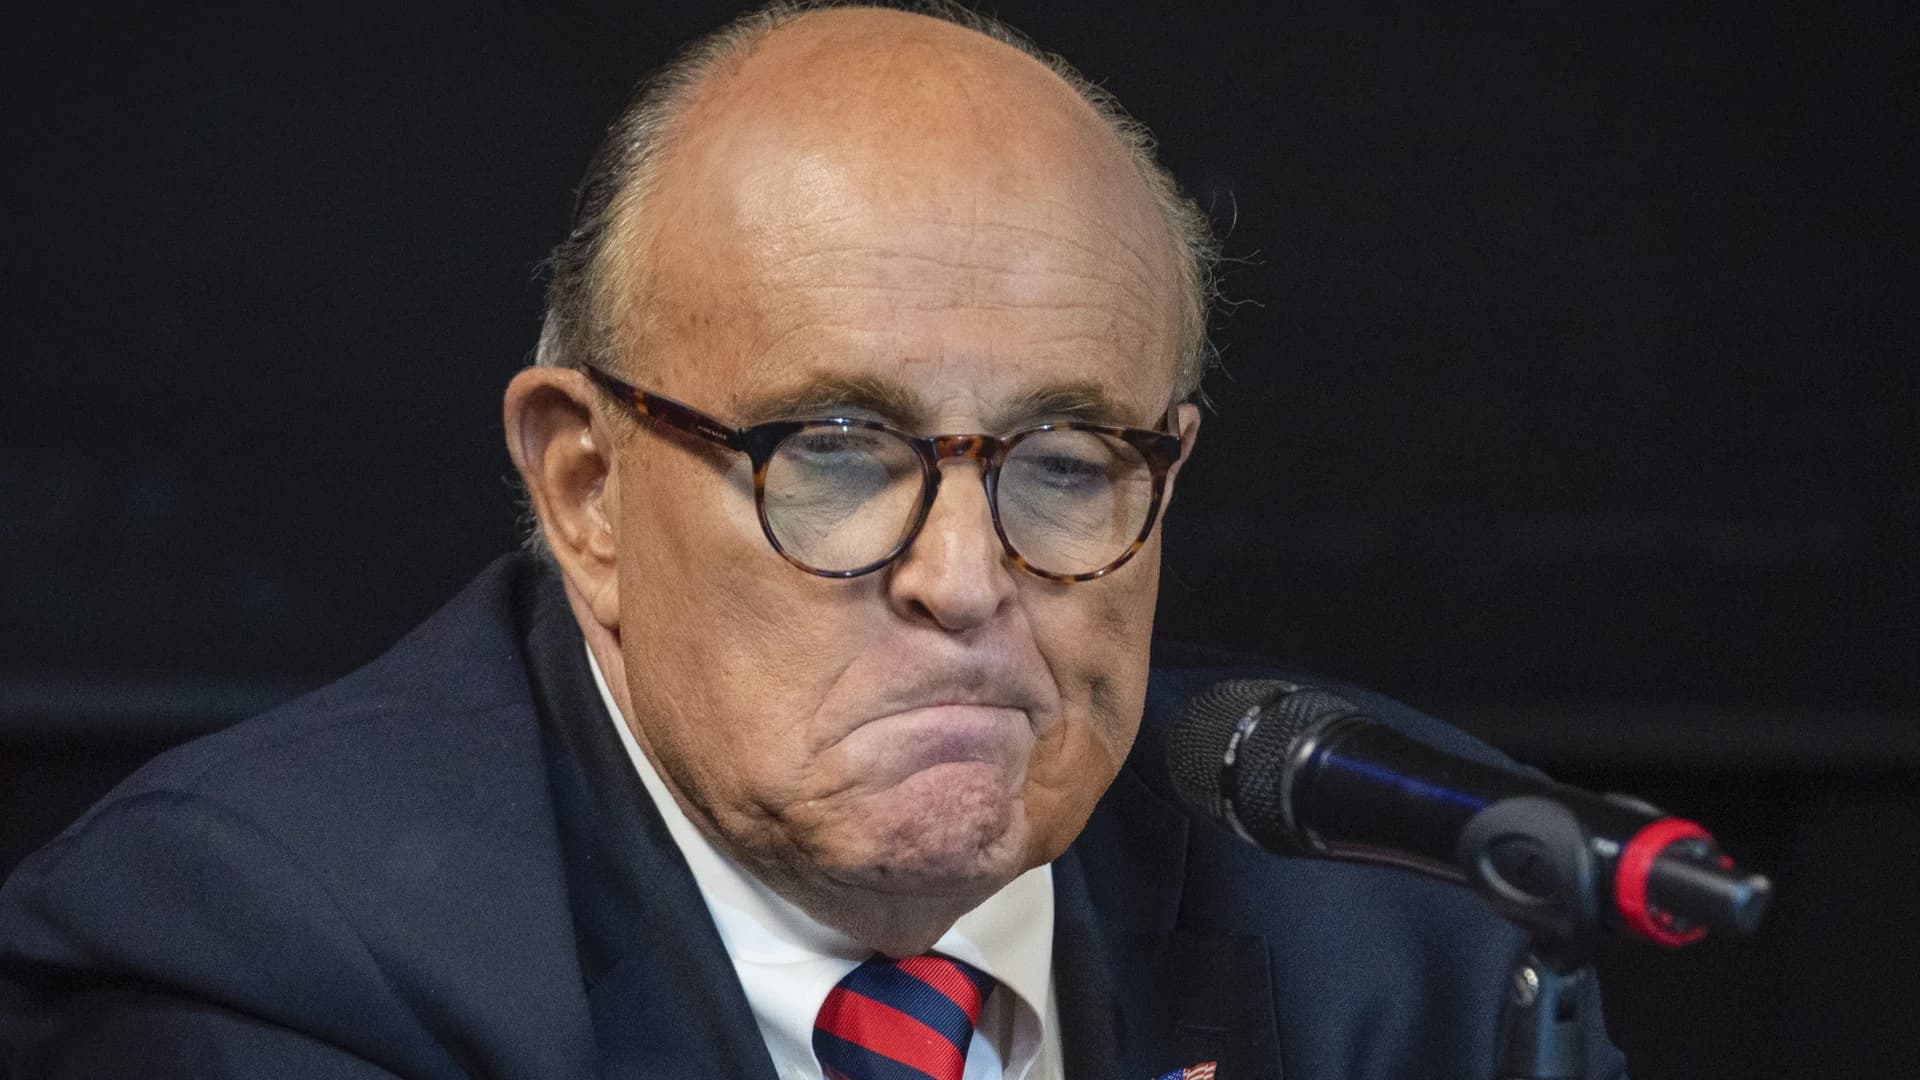 Rudy Giuliani among Trump allies subpoenaed by Jan. 6 panel